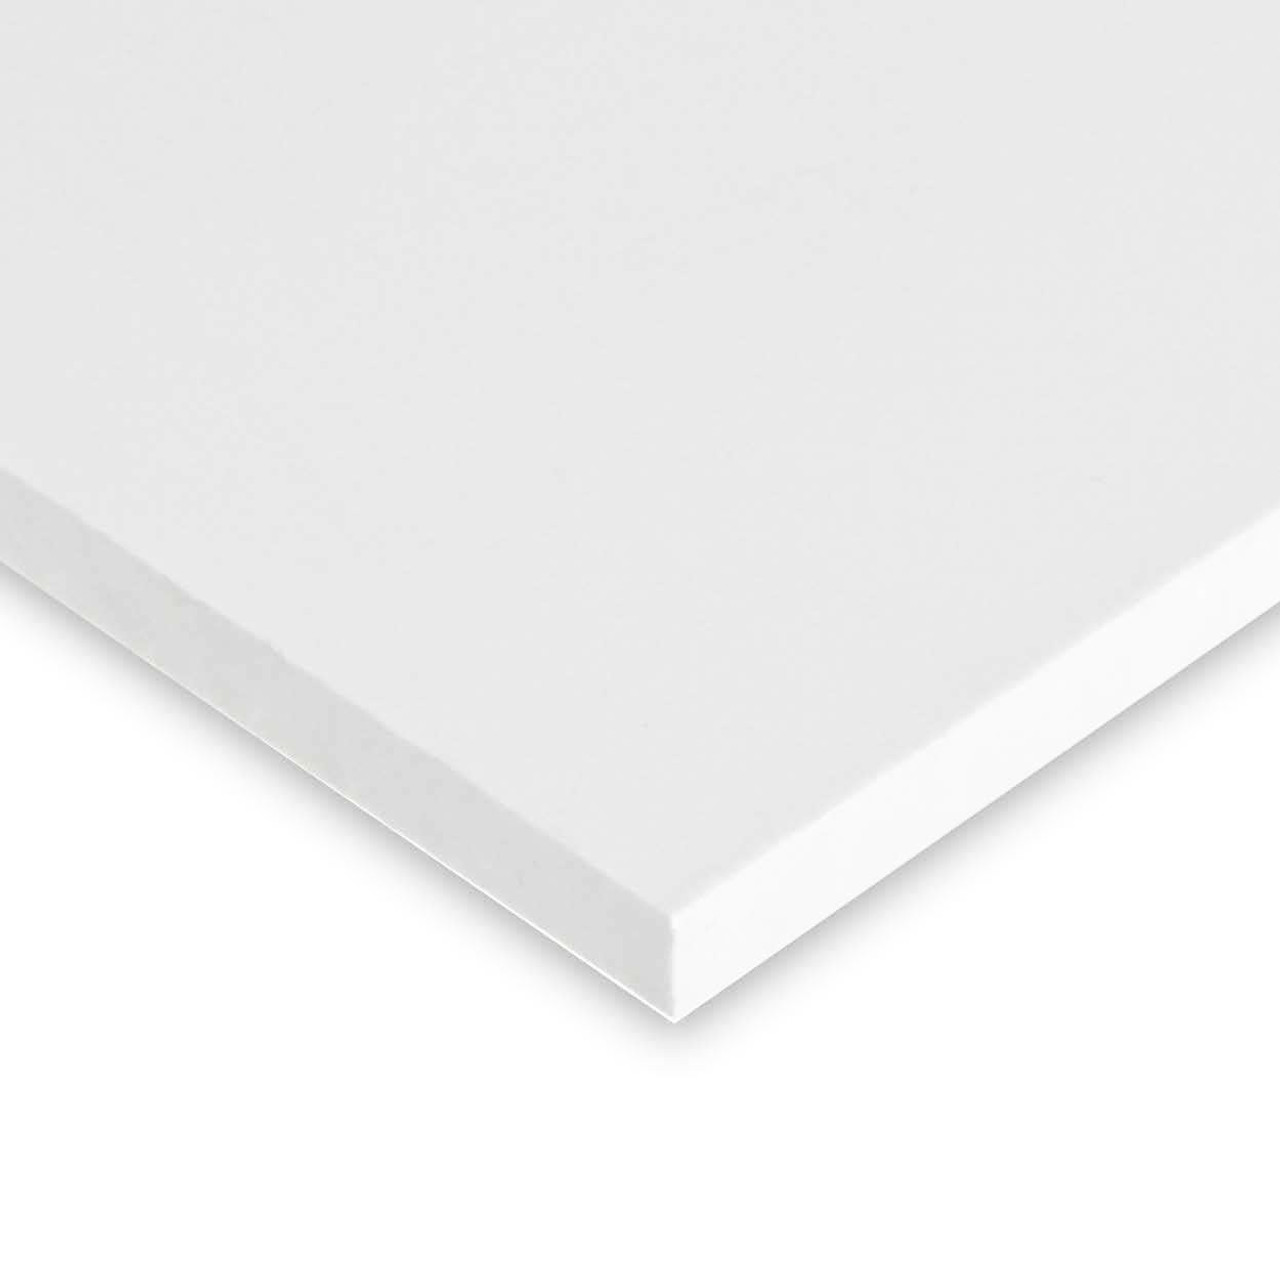 0.236 (1/4 inch) x 24" x 36", PVC Expanded Plastic Sheet, White